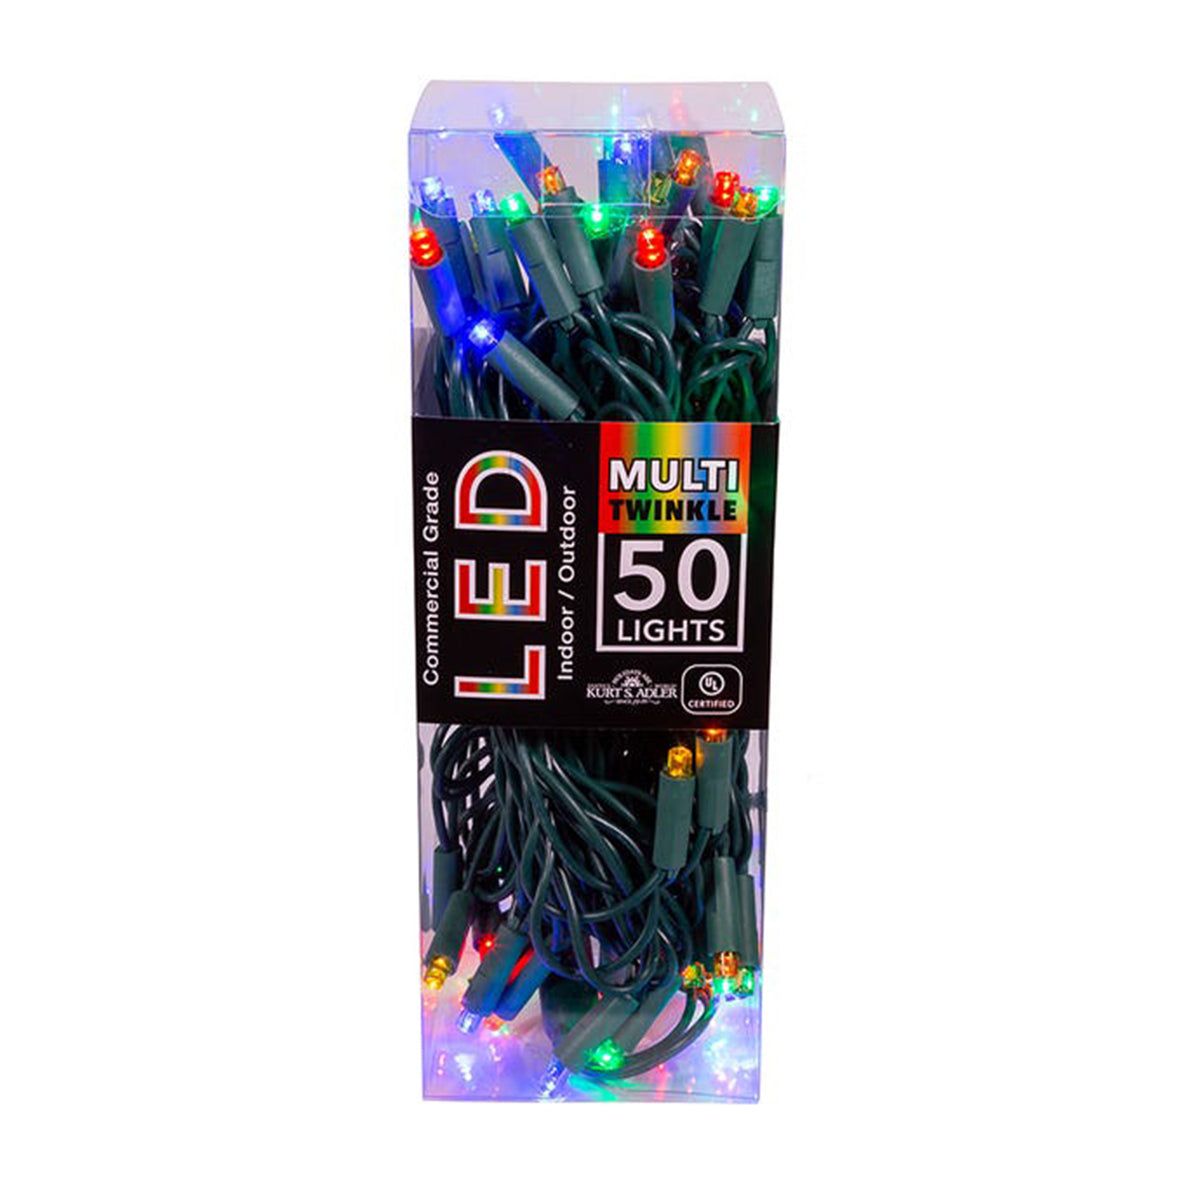 Kurt S Adler 50 Lights 5mm Multi Twinkle Led with Green Wire Set